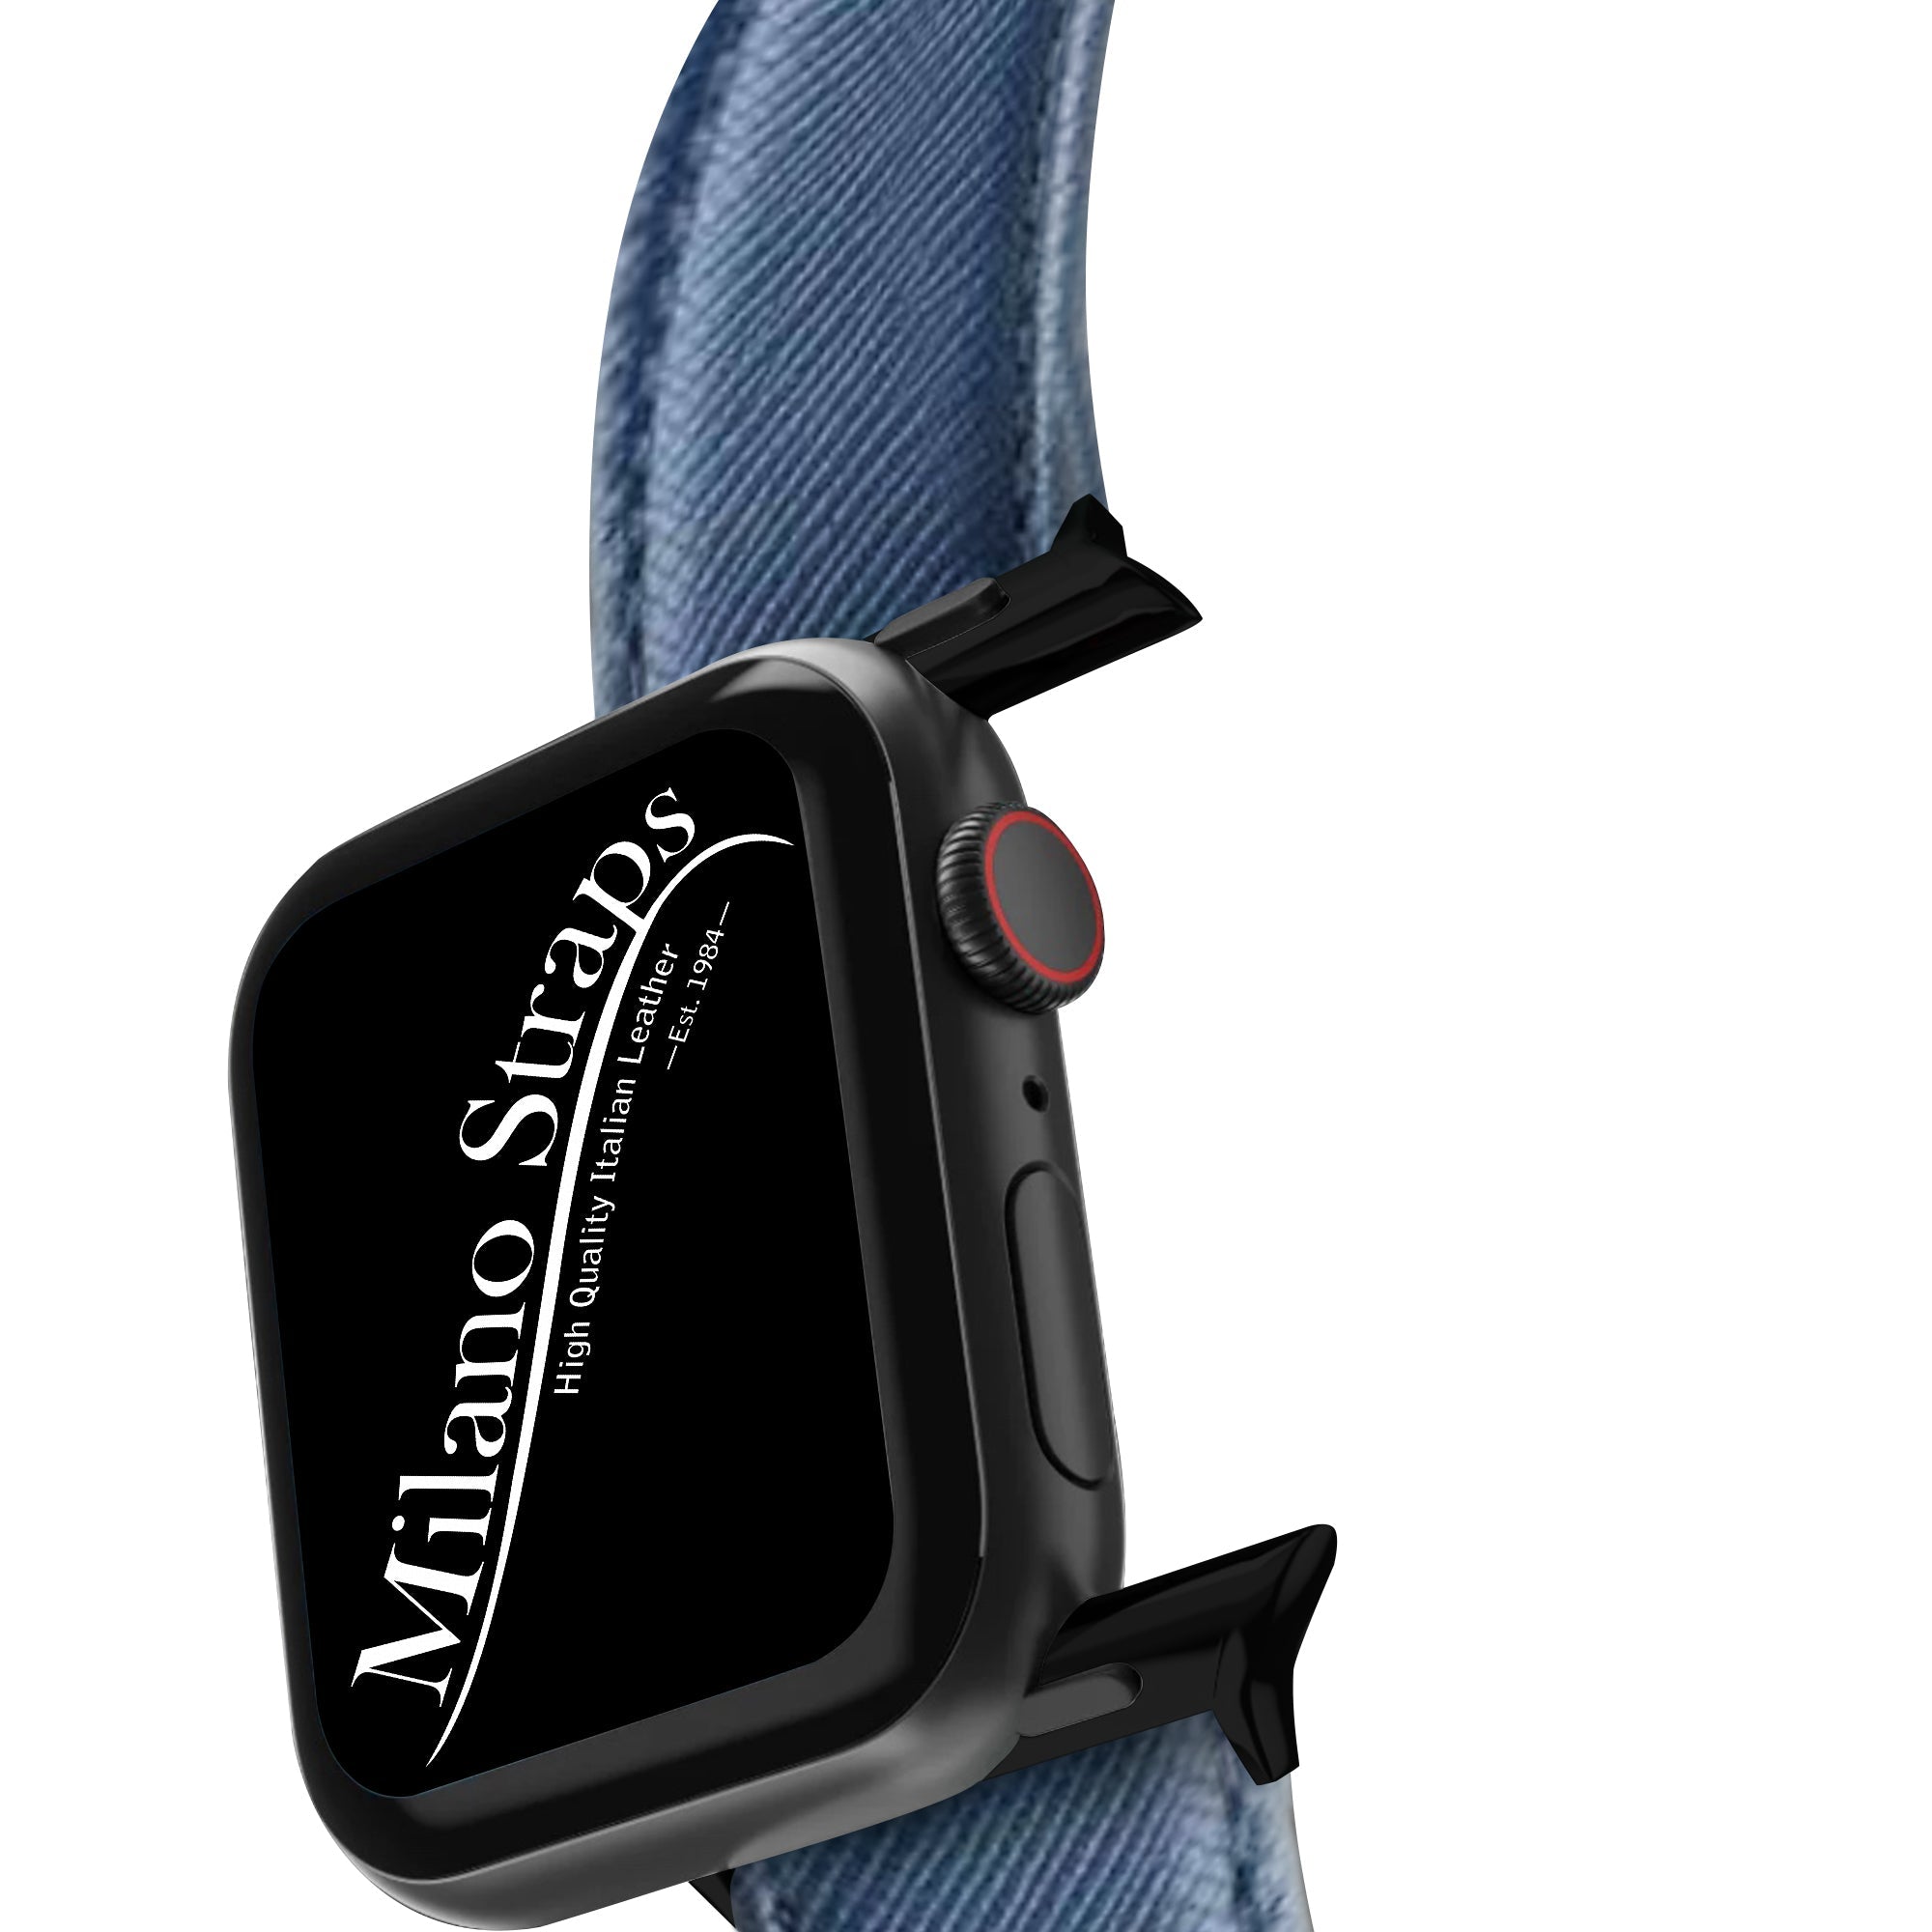 Apple Watch Leather Band ™ Blue Saffiano Tone Stitches - Milano Straps